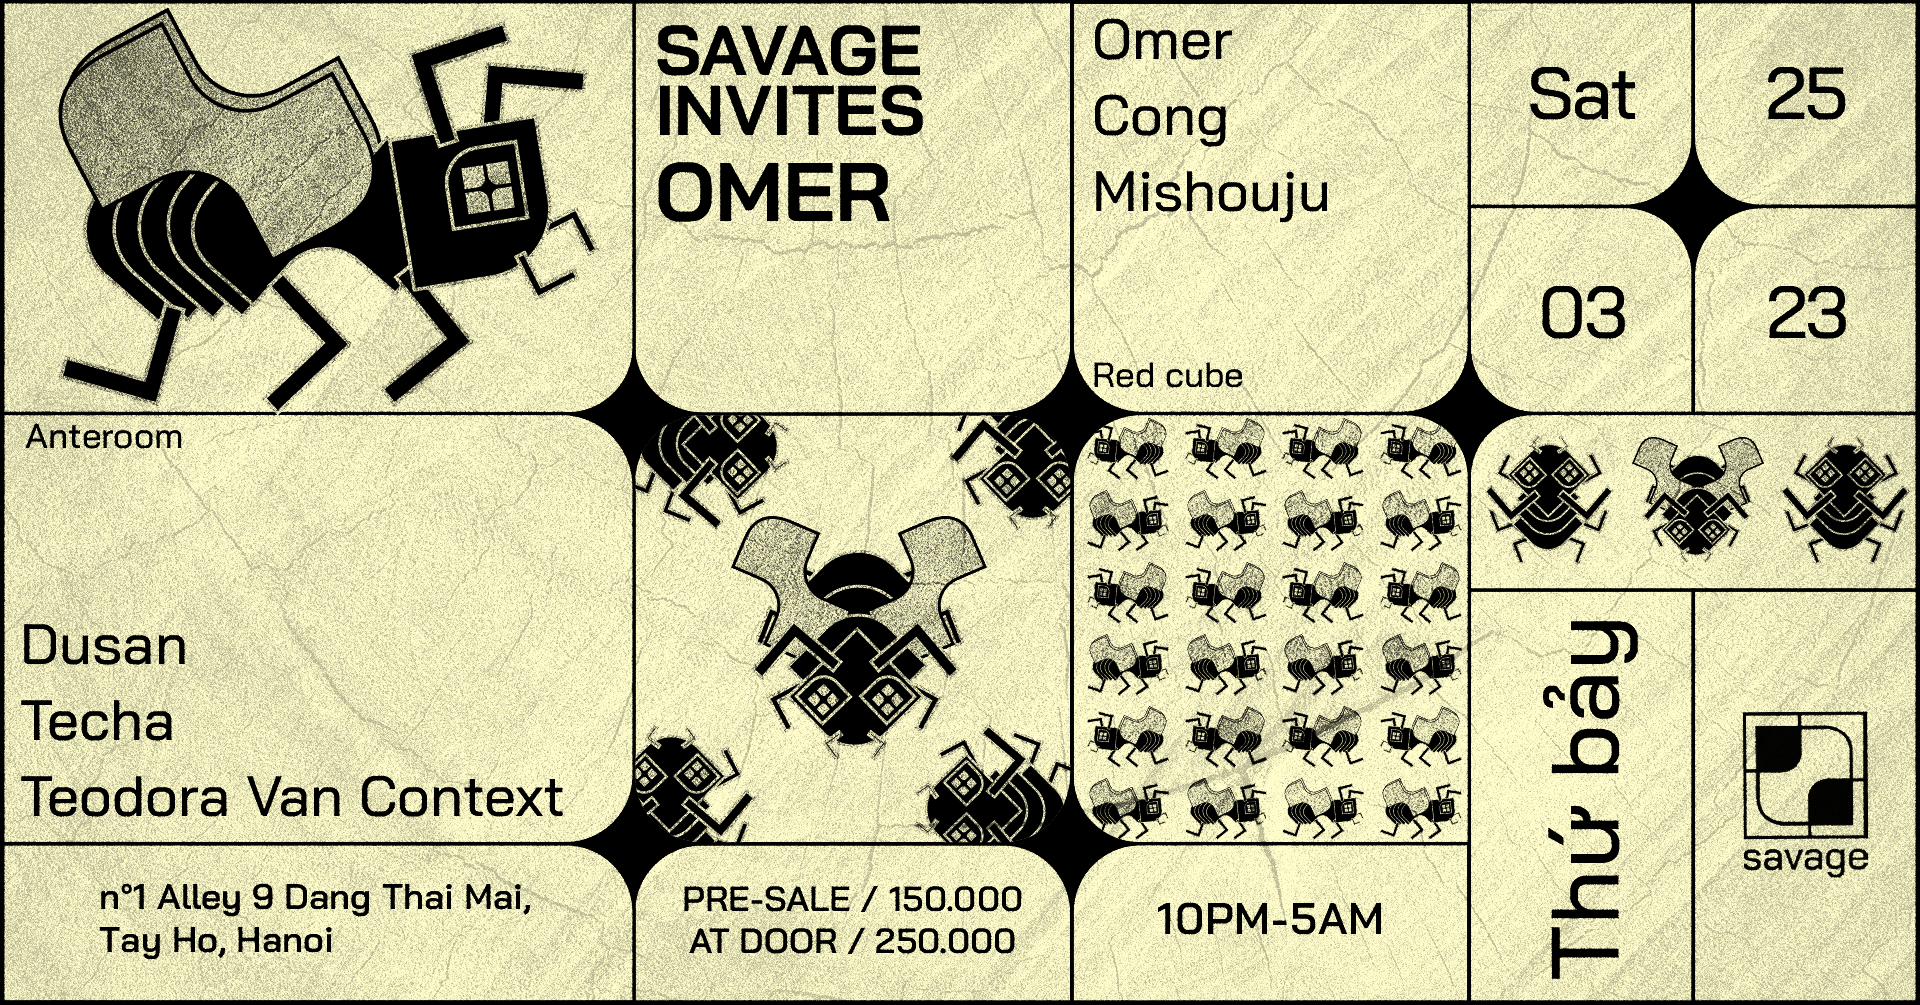 Savage Invites Omer - Página trasera